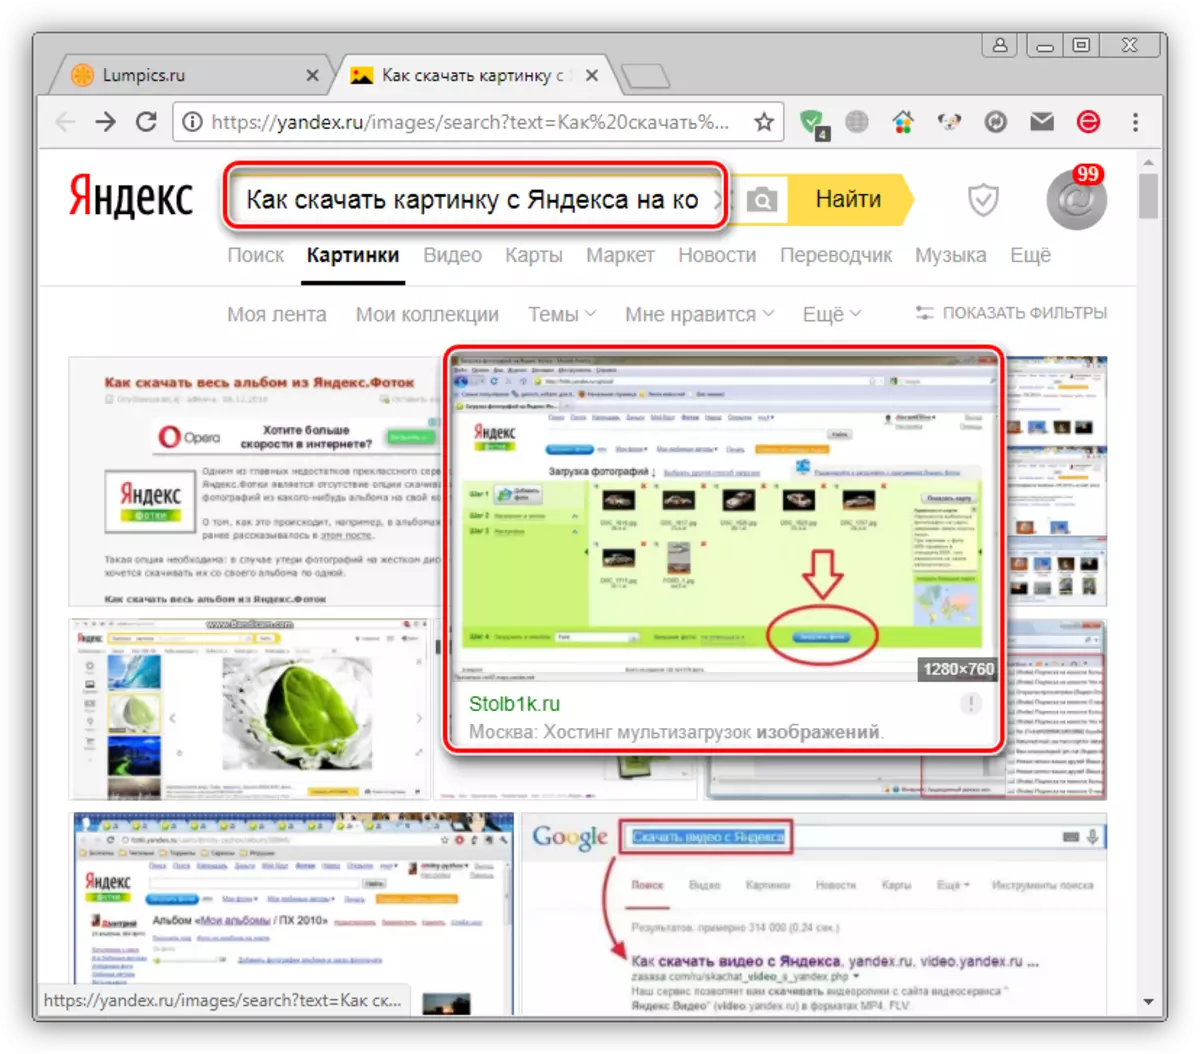 Pilihan gambar untuk mengunduh hasil pencarian Yandex di Google Chrome